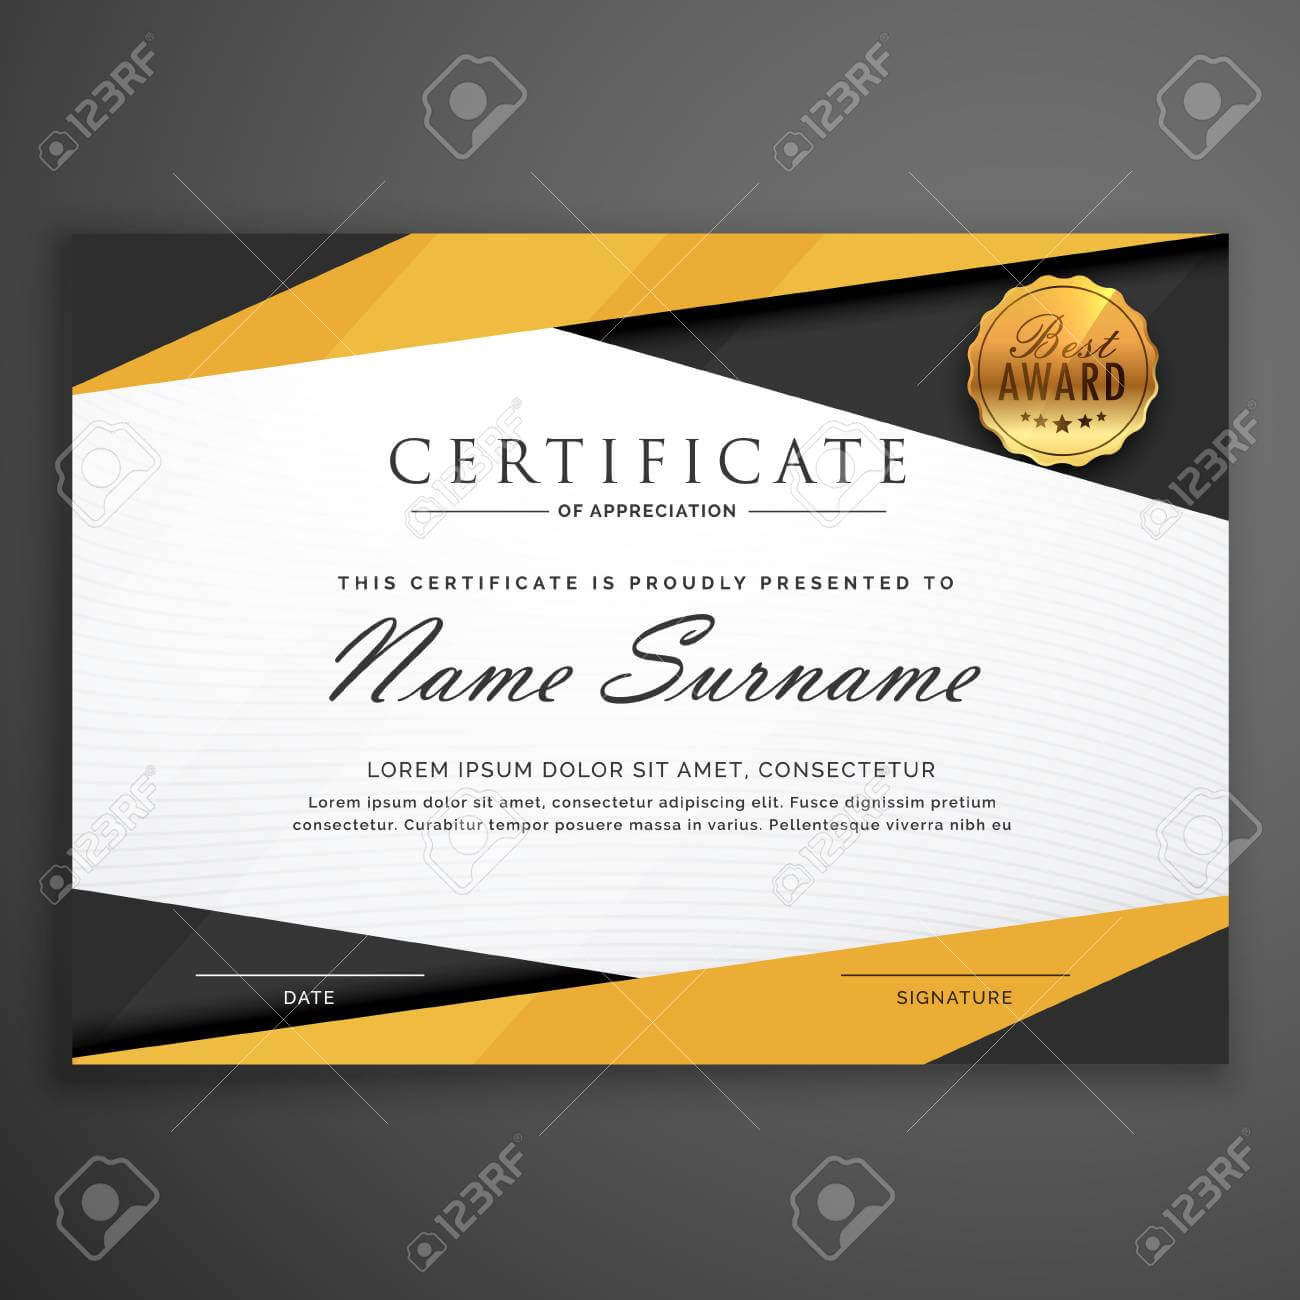 Yellow And Black Geometric Certificate Award Design Template With Regard To Award Certificate Design Template